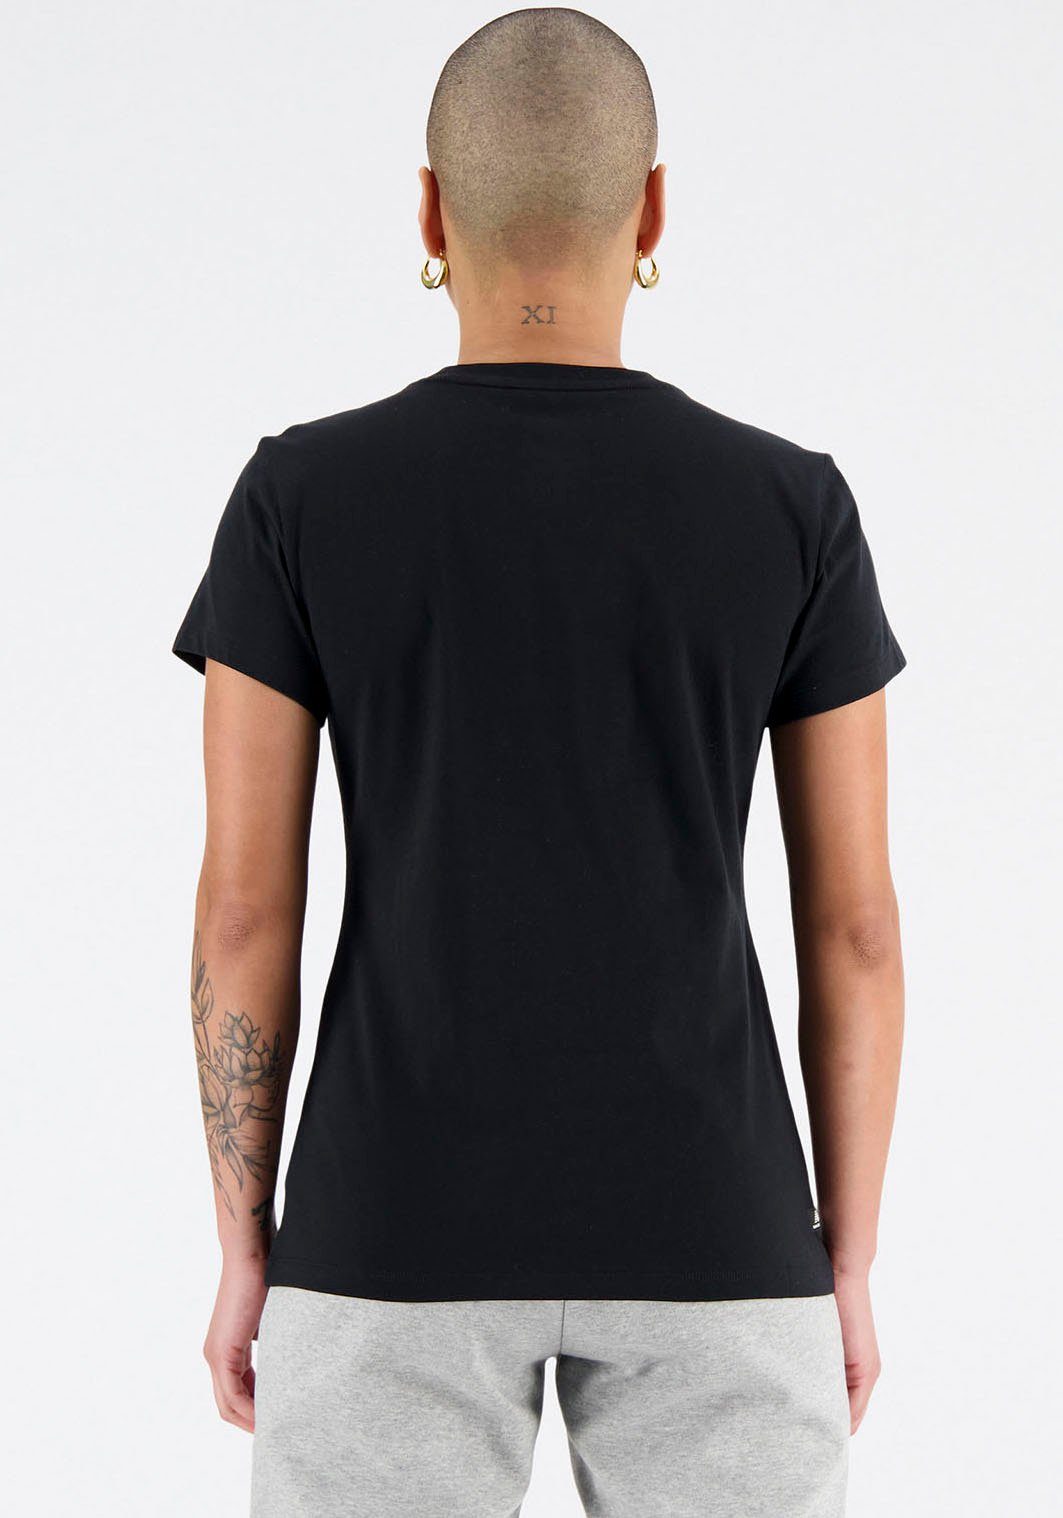 New black Balance T-Shirt 001